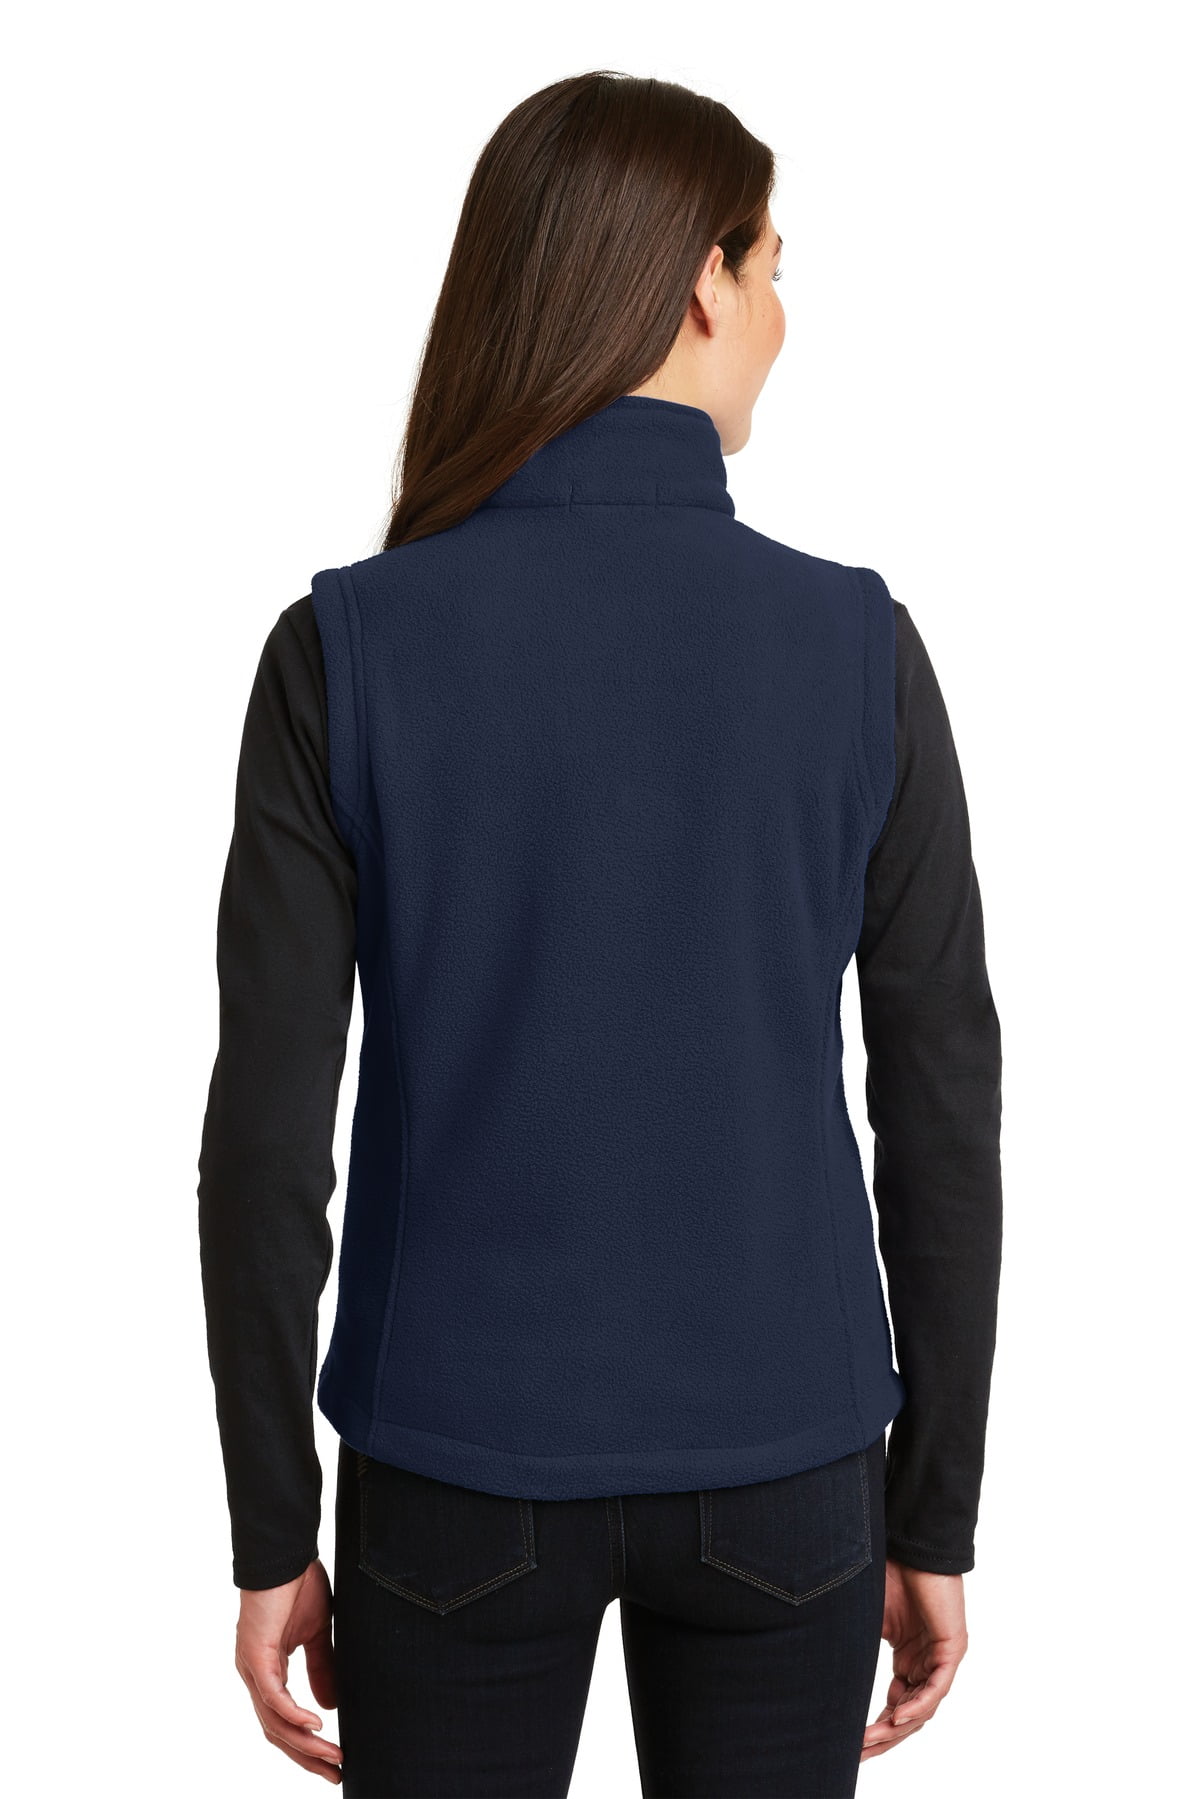 Port Authority Ladies Value Fleece Vest-4XL (True Royal) 